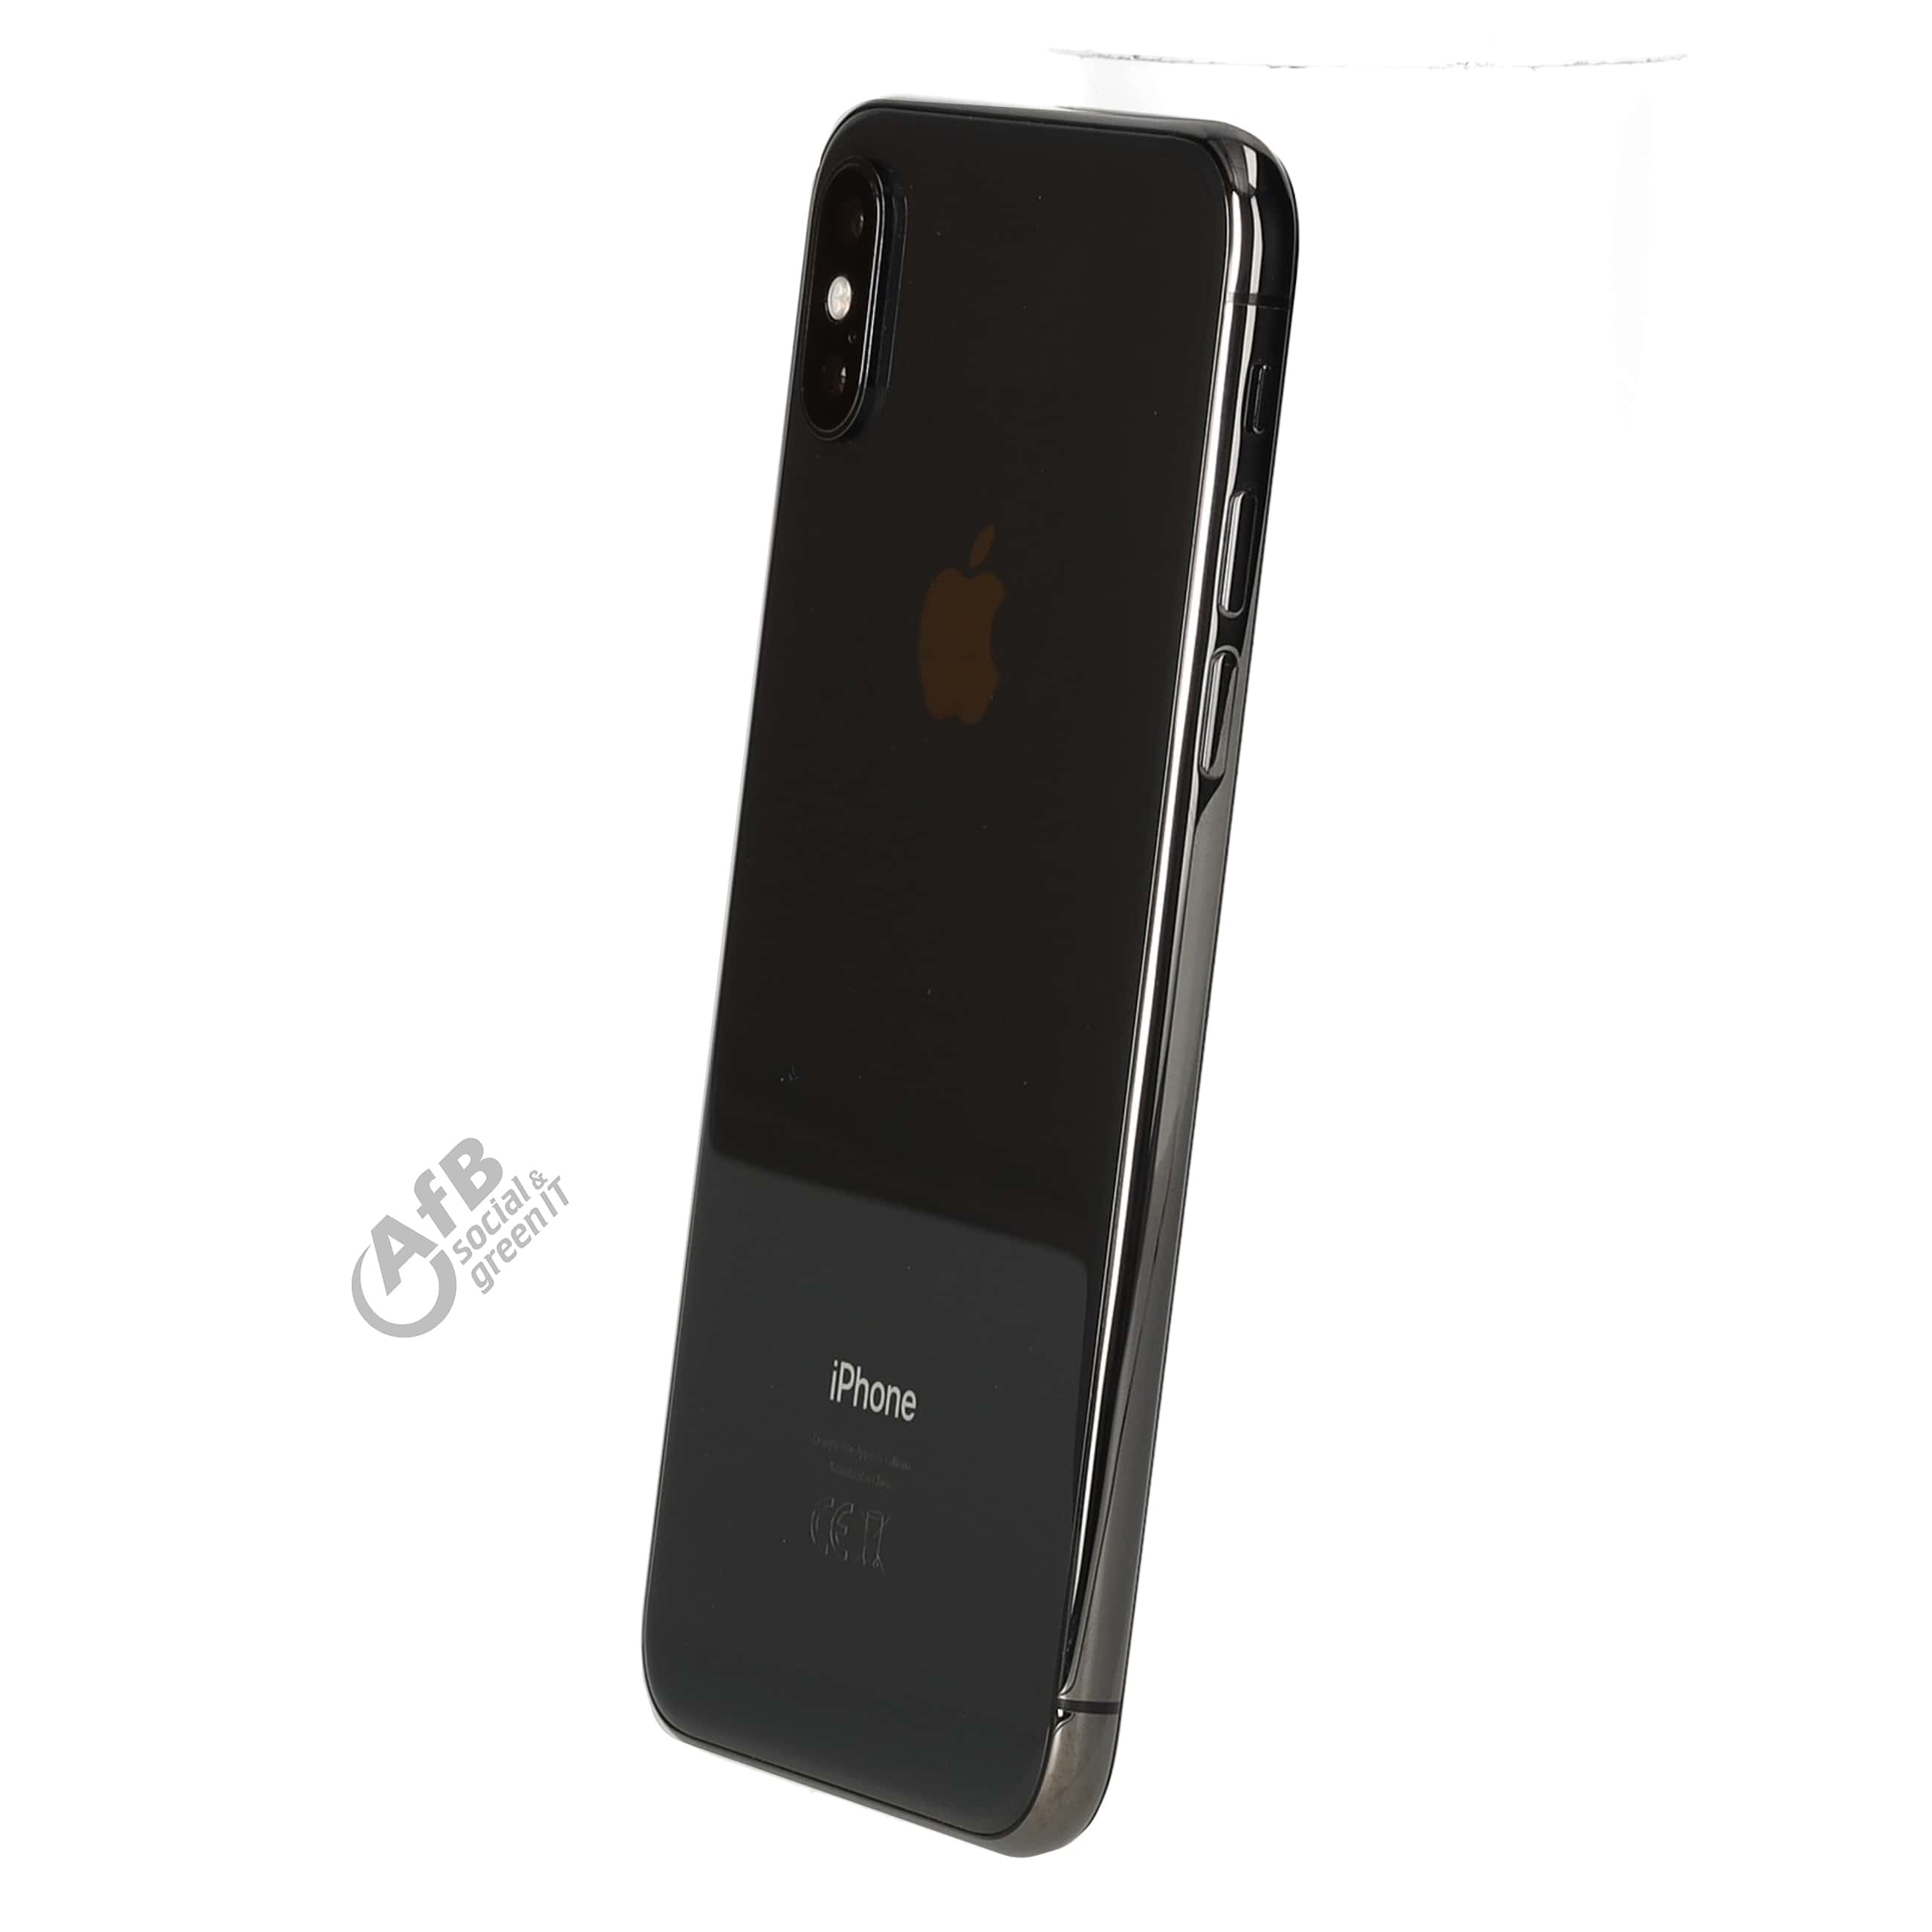 Apple iPhone X - 256 GB - Space Gray - Single-SIM